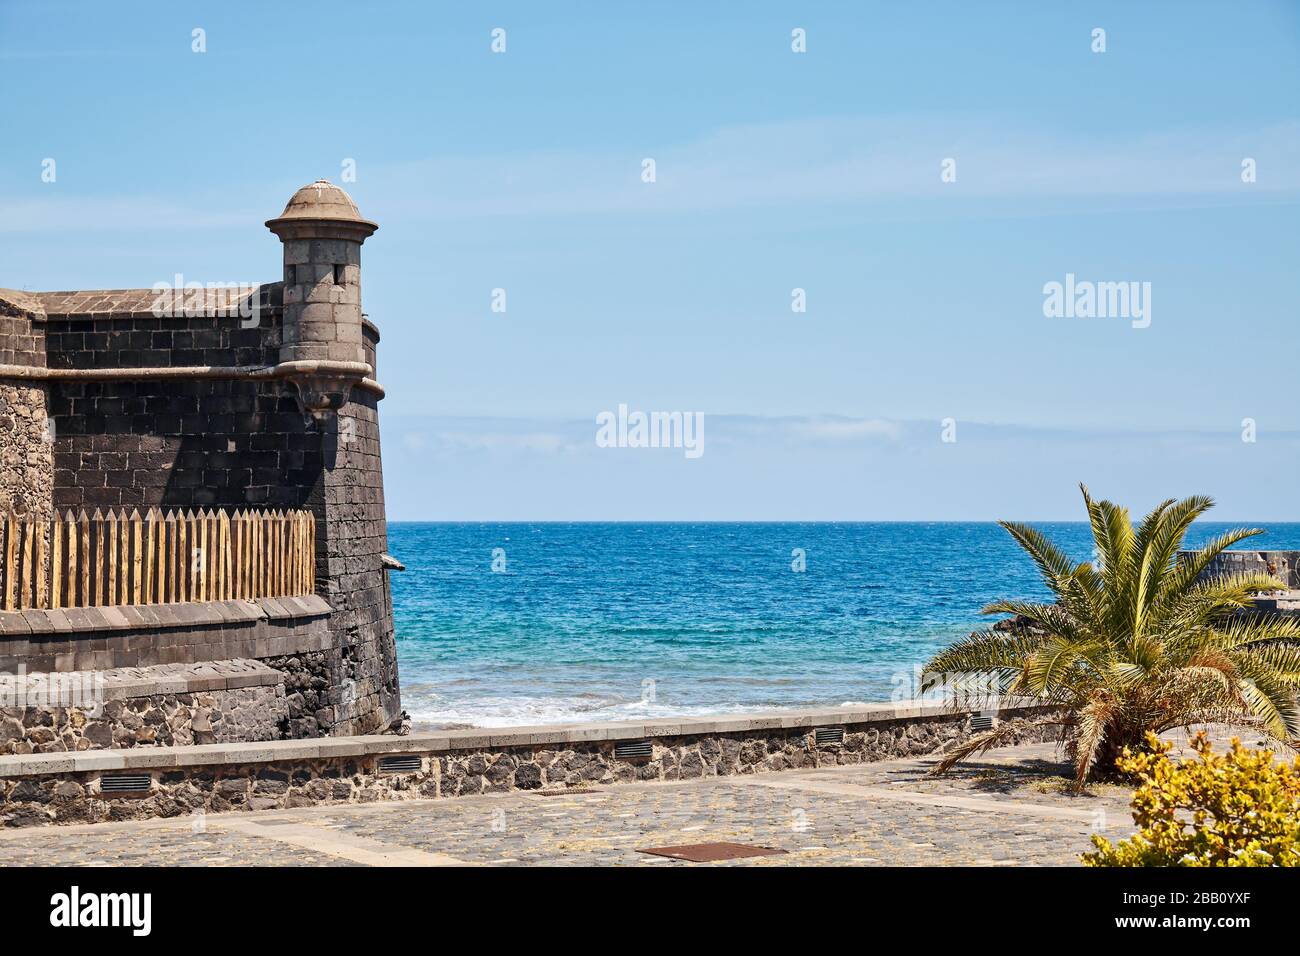 Tower of the Castle of St John the Baptist (Black Castle) in Santa Cruz de Tenerife, Spain. Stock Photo